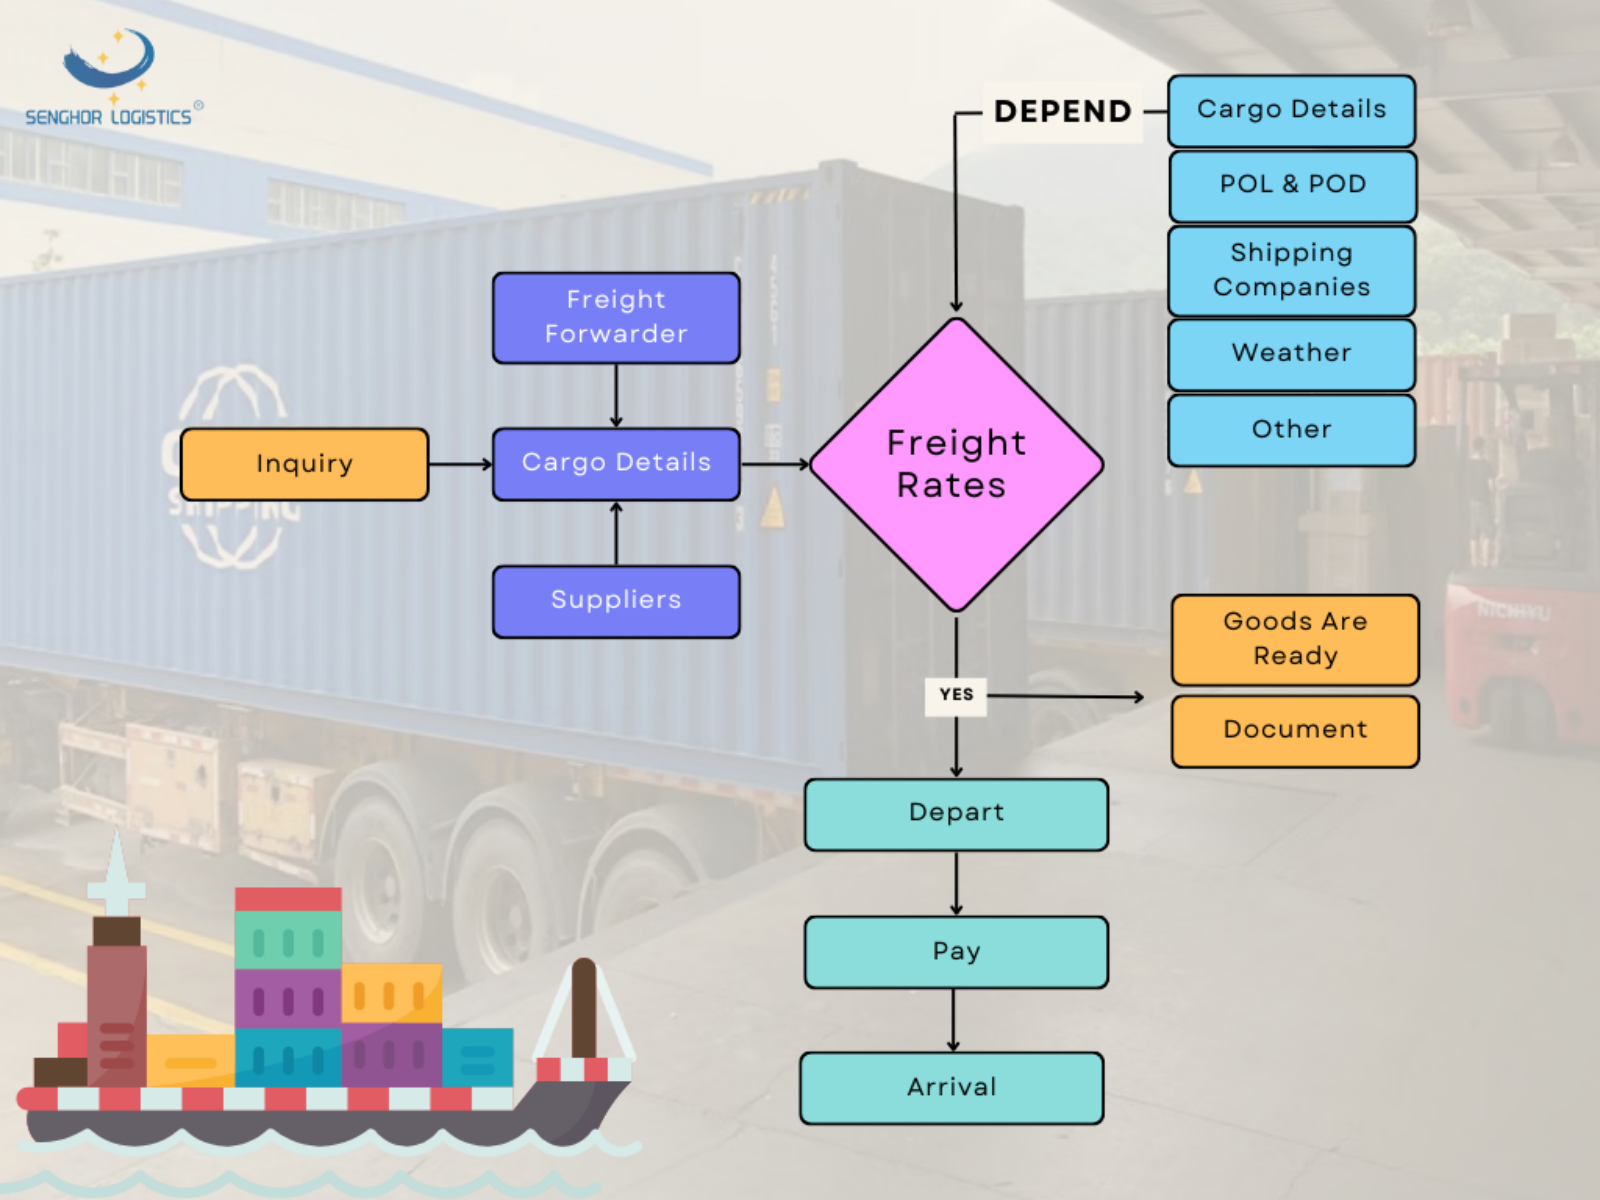 1senghor logistics shipping service inquiry and process